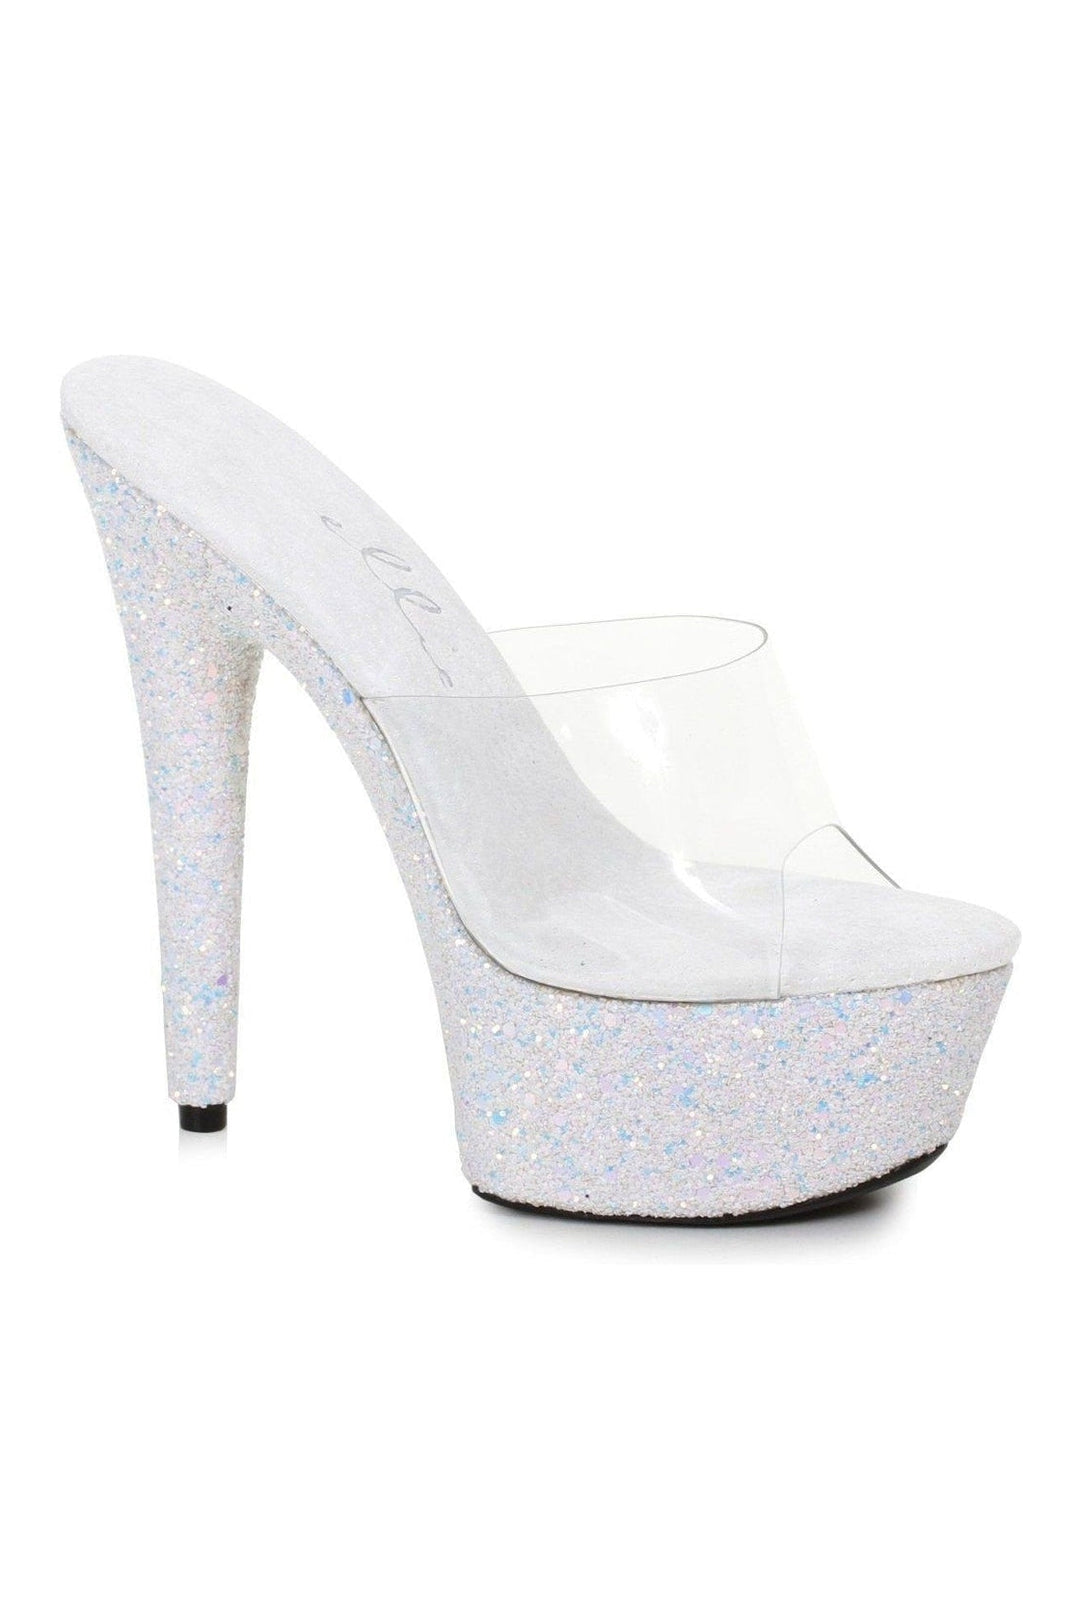 Ellie Shoes White Slides Platform Stripper Shoes | Buy at Sexyshoes.com